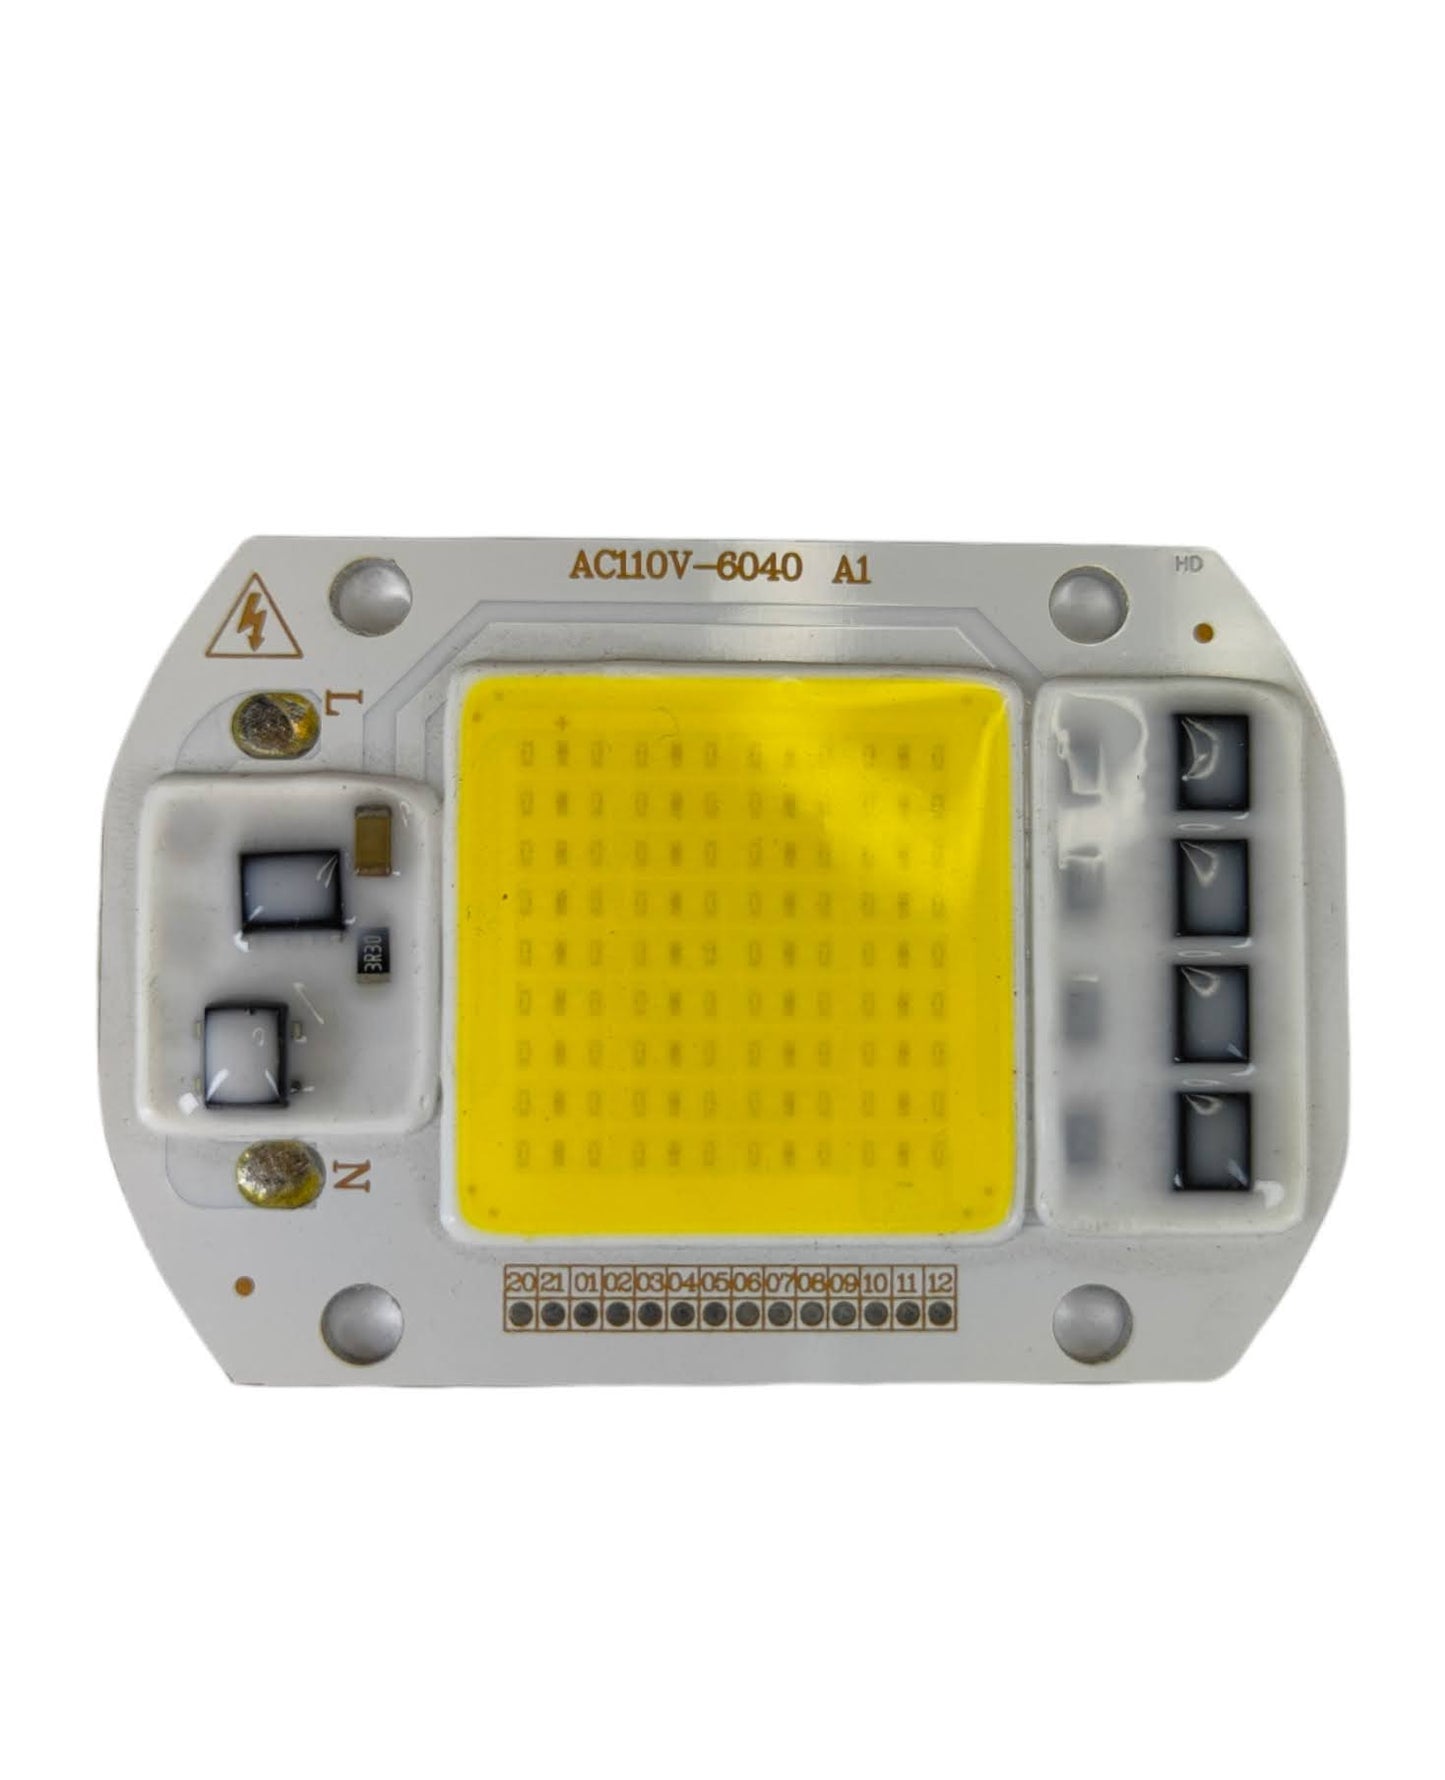 Chip LED de potencia 30w | Pastilla LED 110v AC | Repuesto LED para reflector